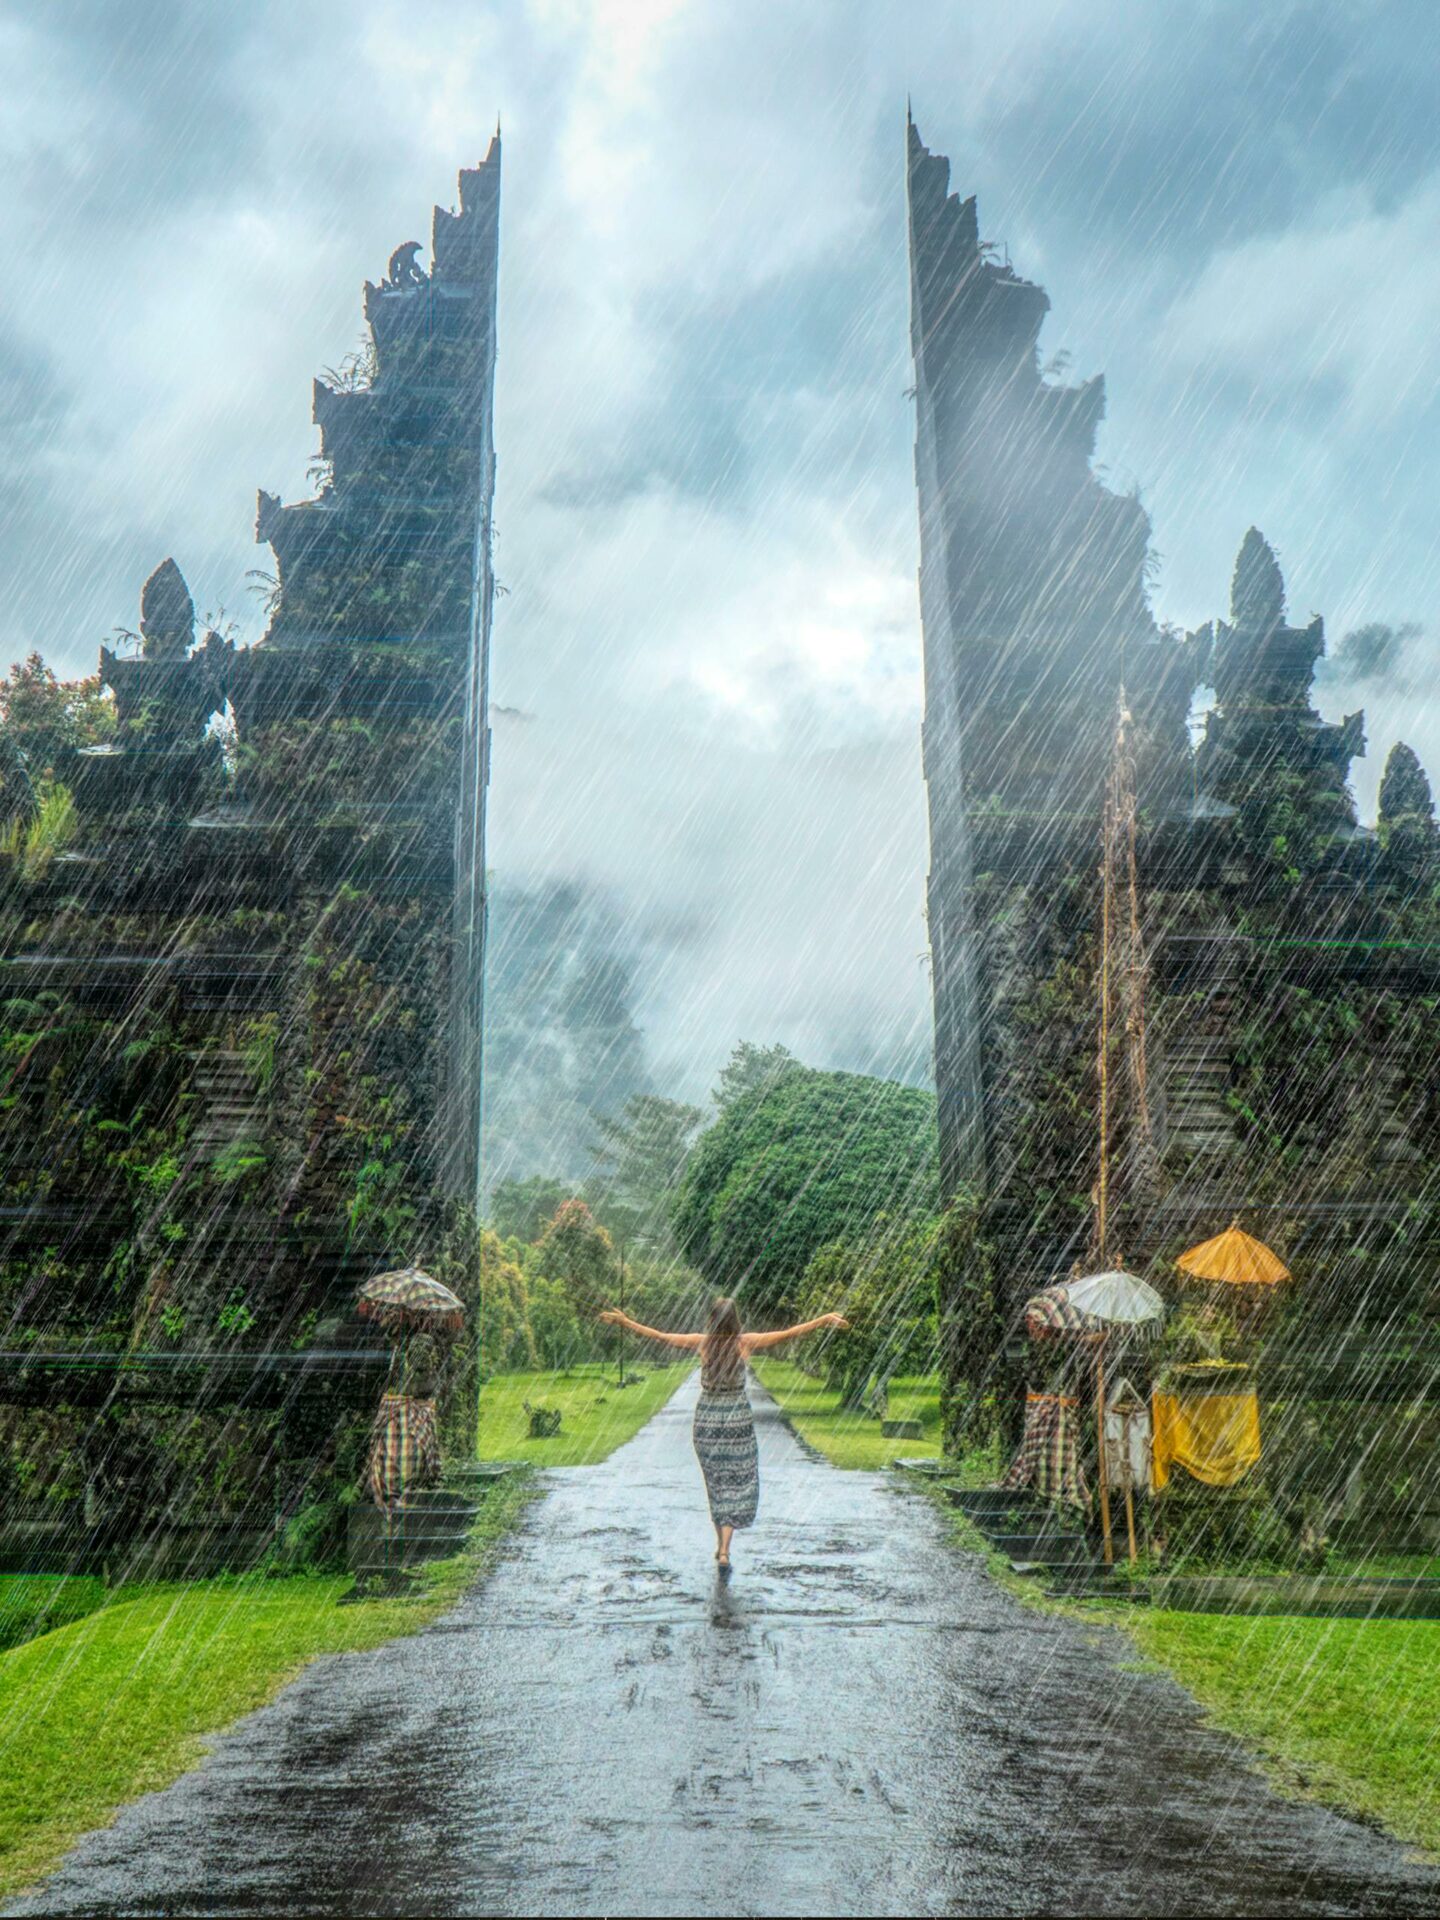 When Is The Rainy Season In Bali?